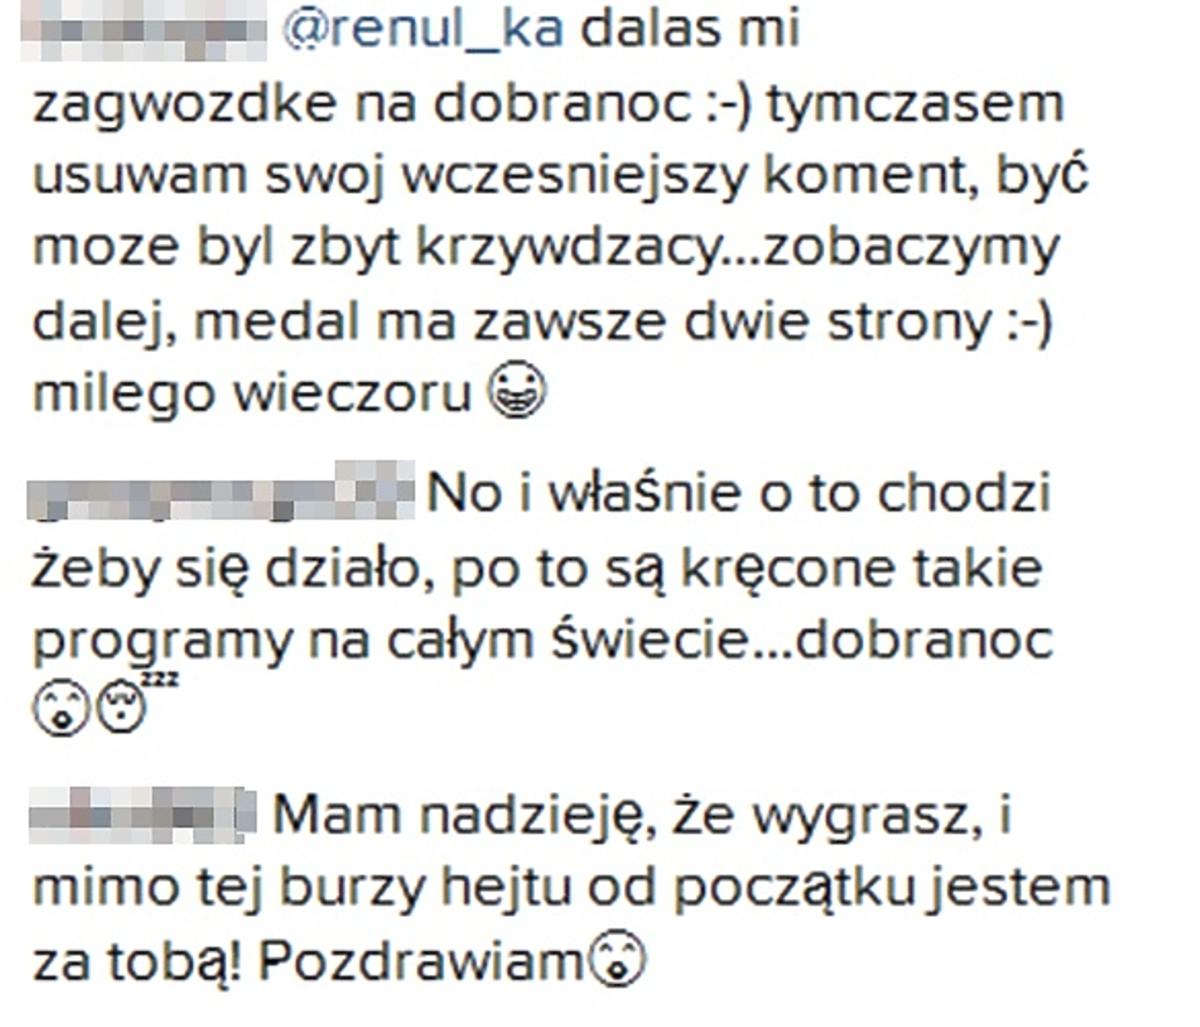 Komentarze na profilu Renaty Kaczoruk